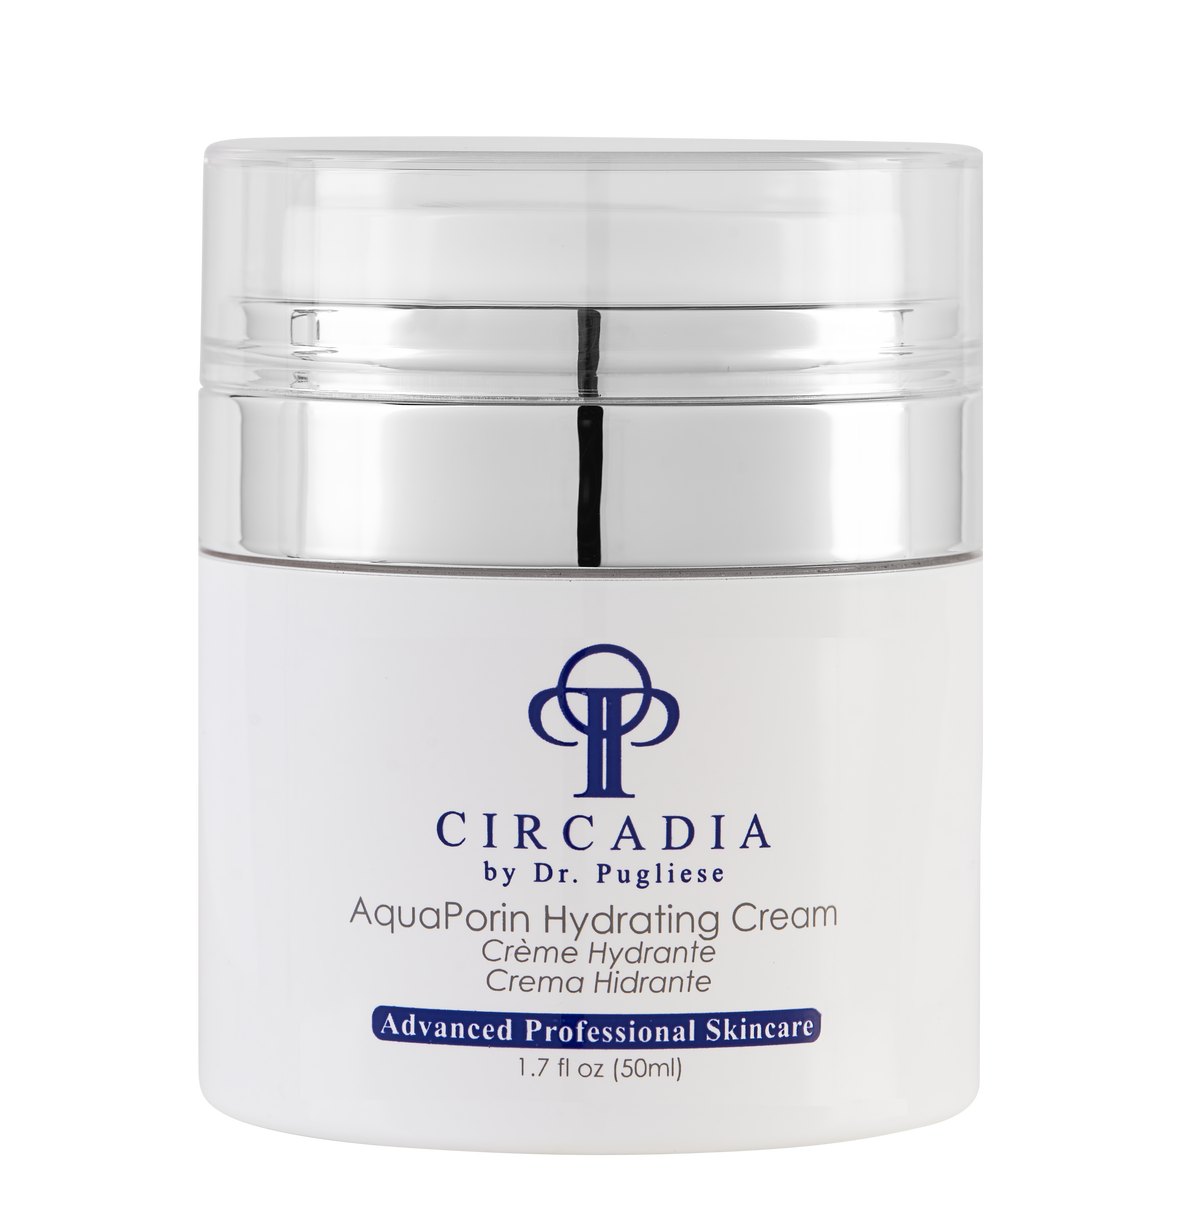 AquaPorin Hydrating Cream - CIRCADIA